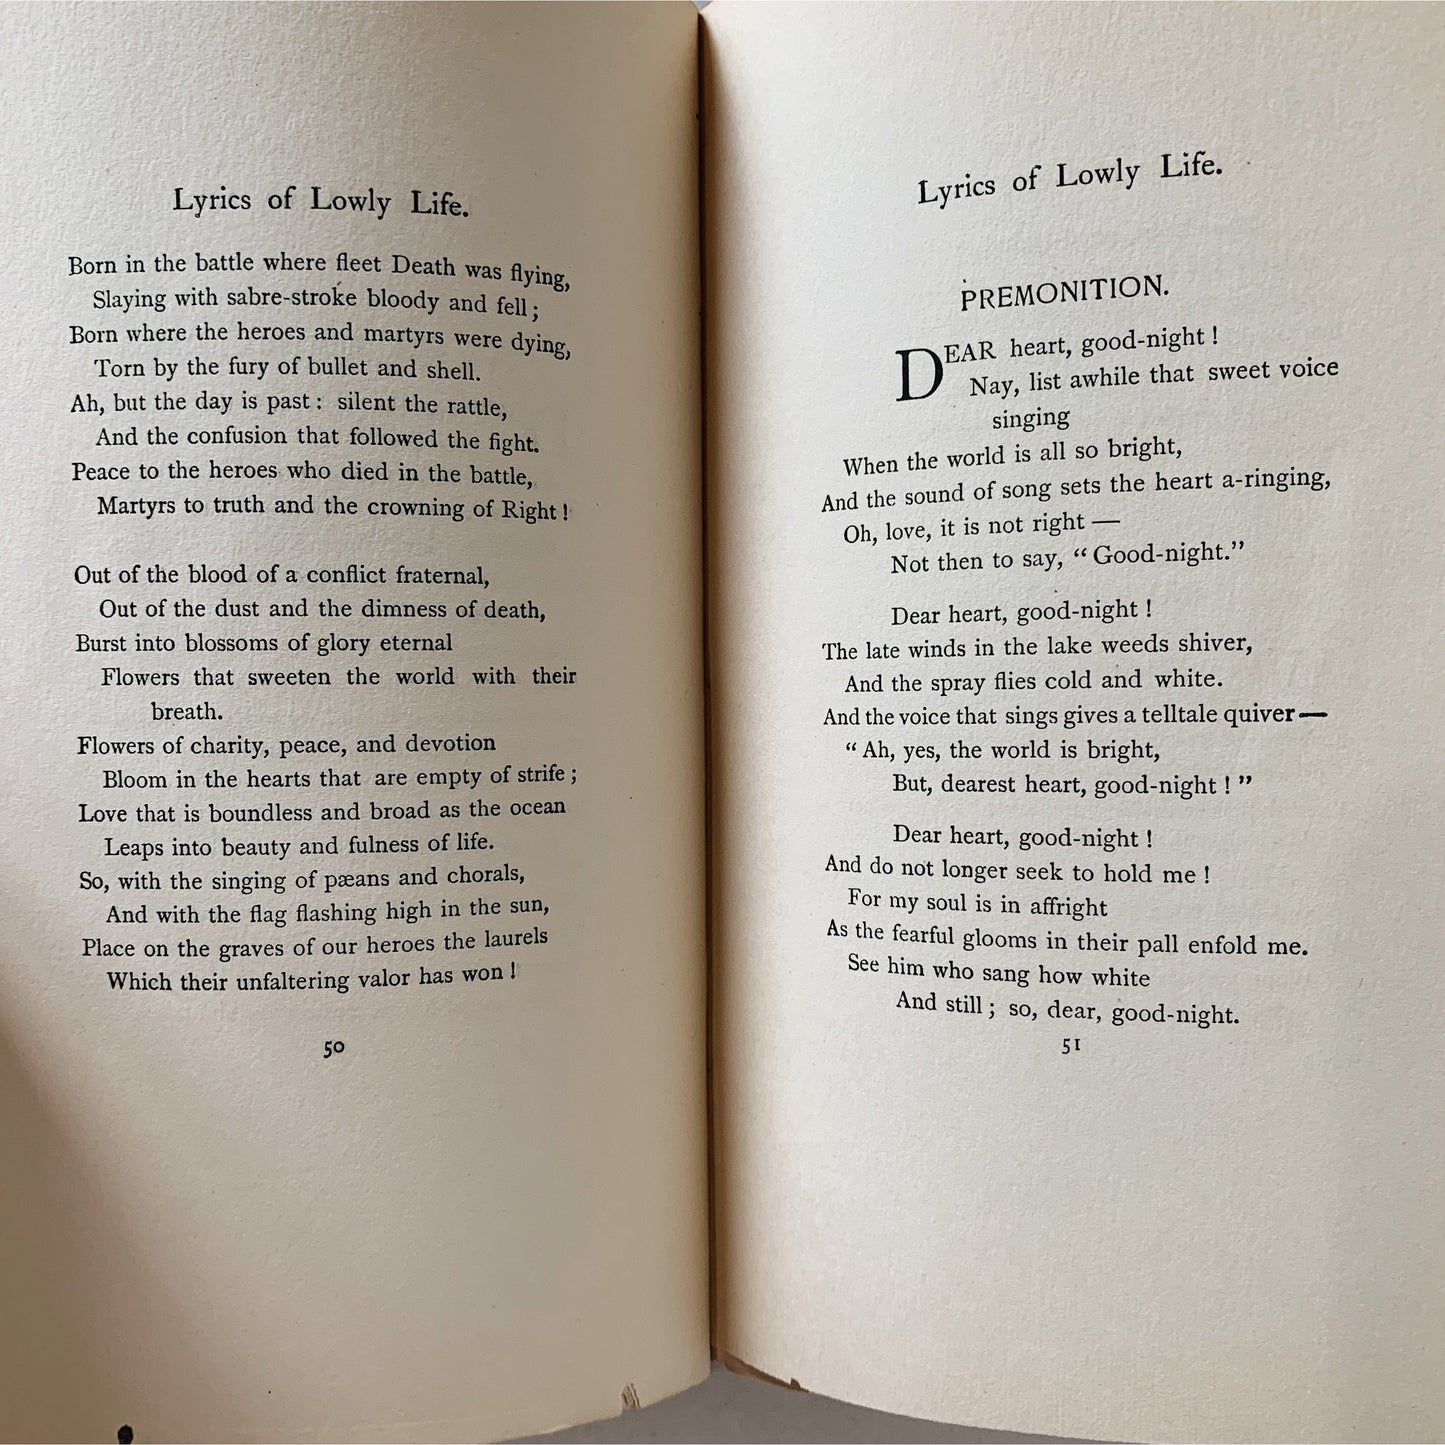 Lyrics of Lowly Life, Paul L. Dunbar, 1908, Hardcover, African American Poetry